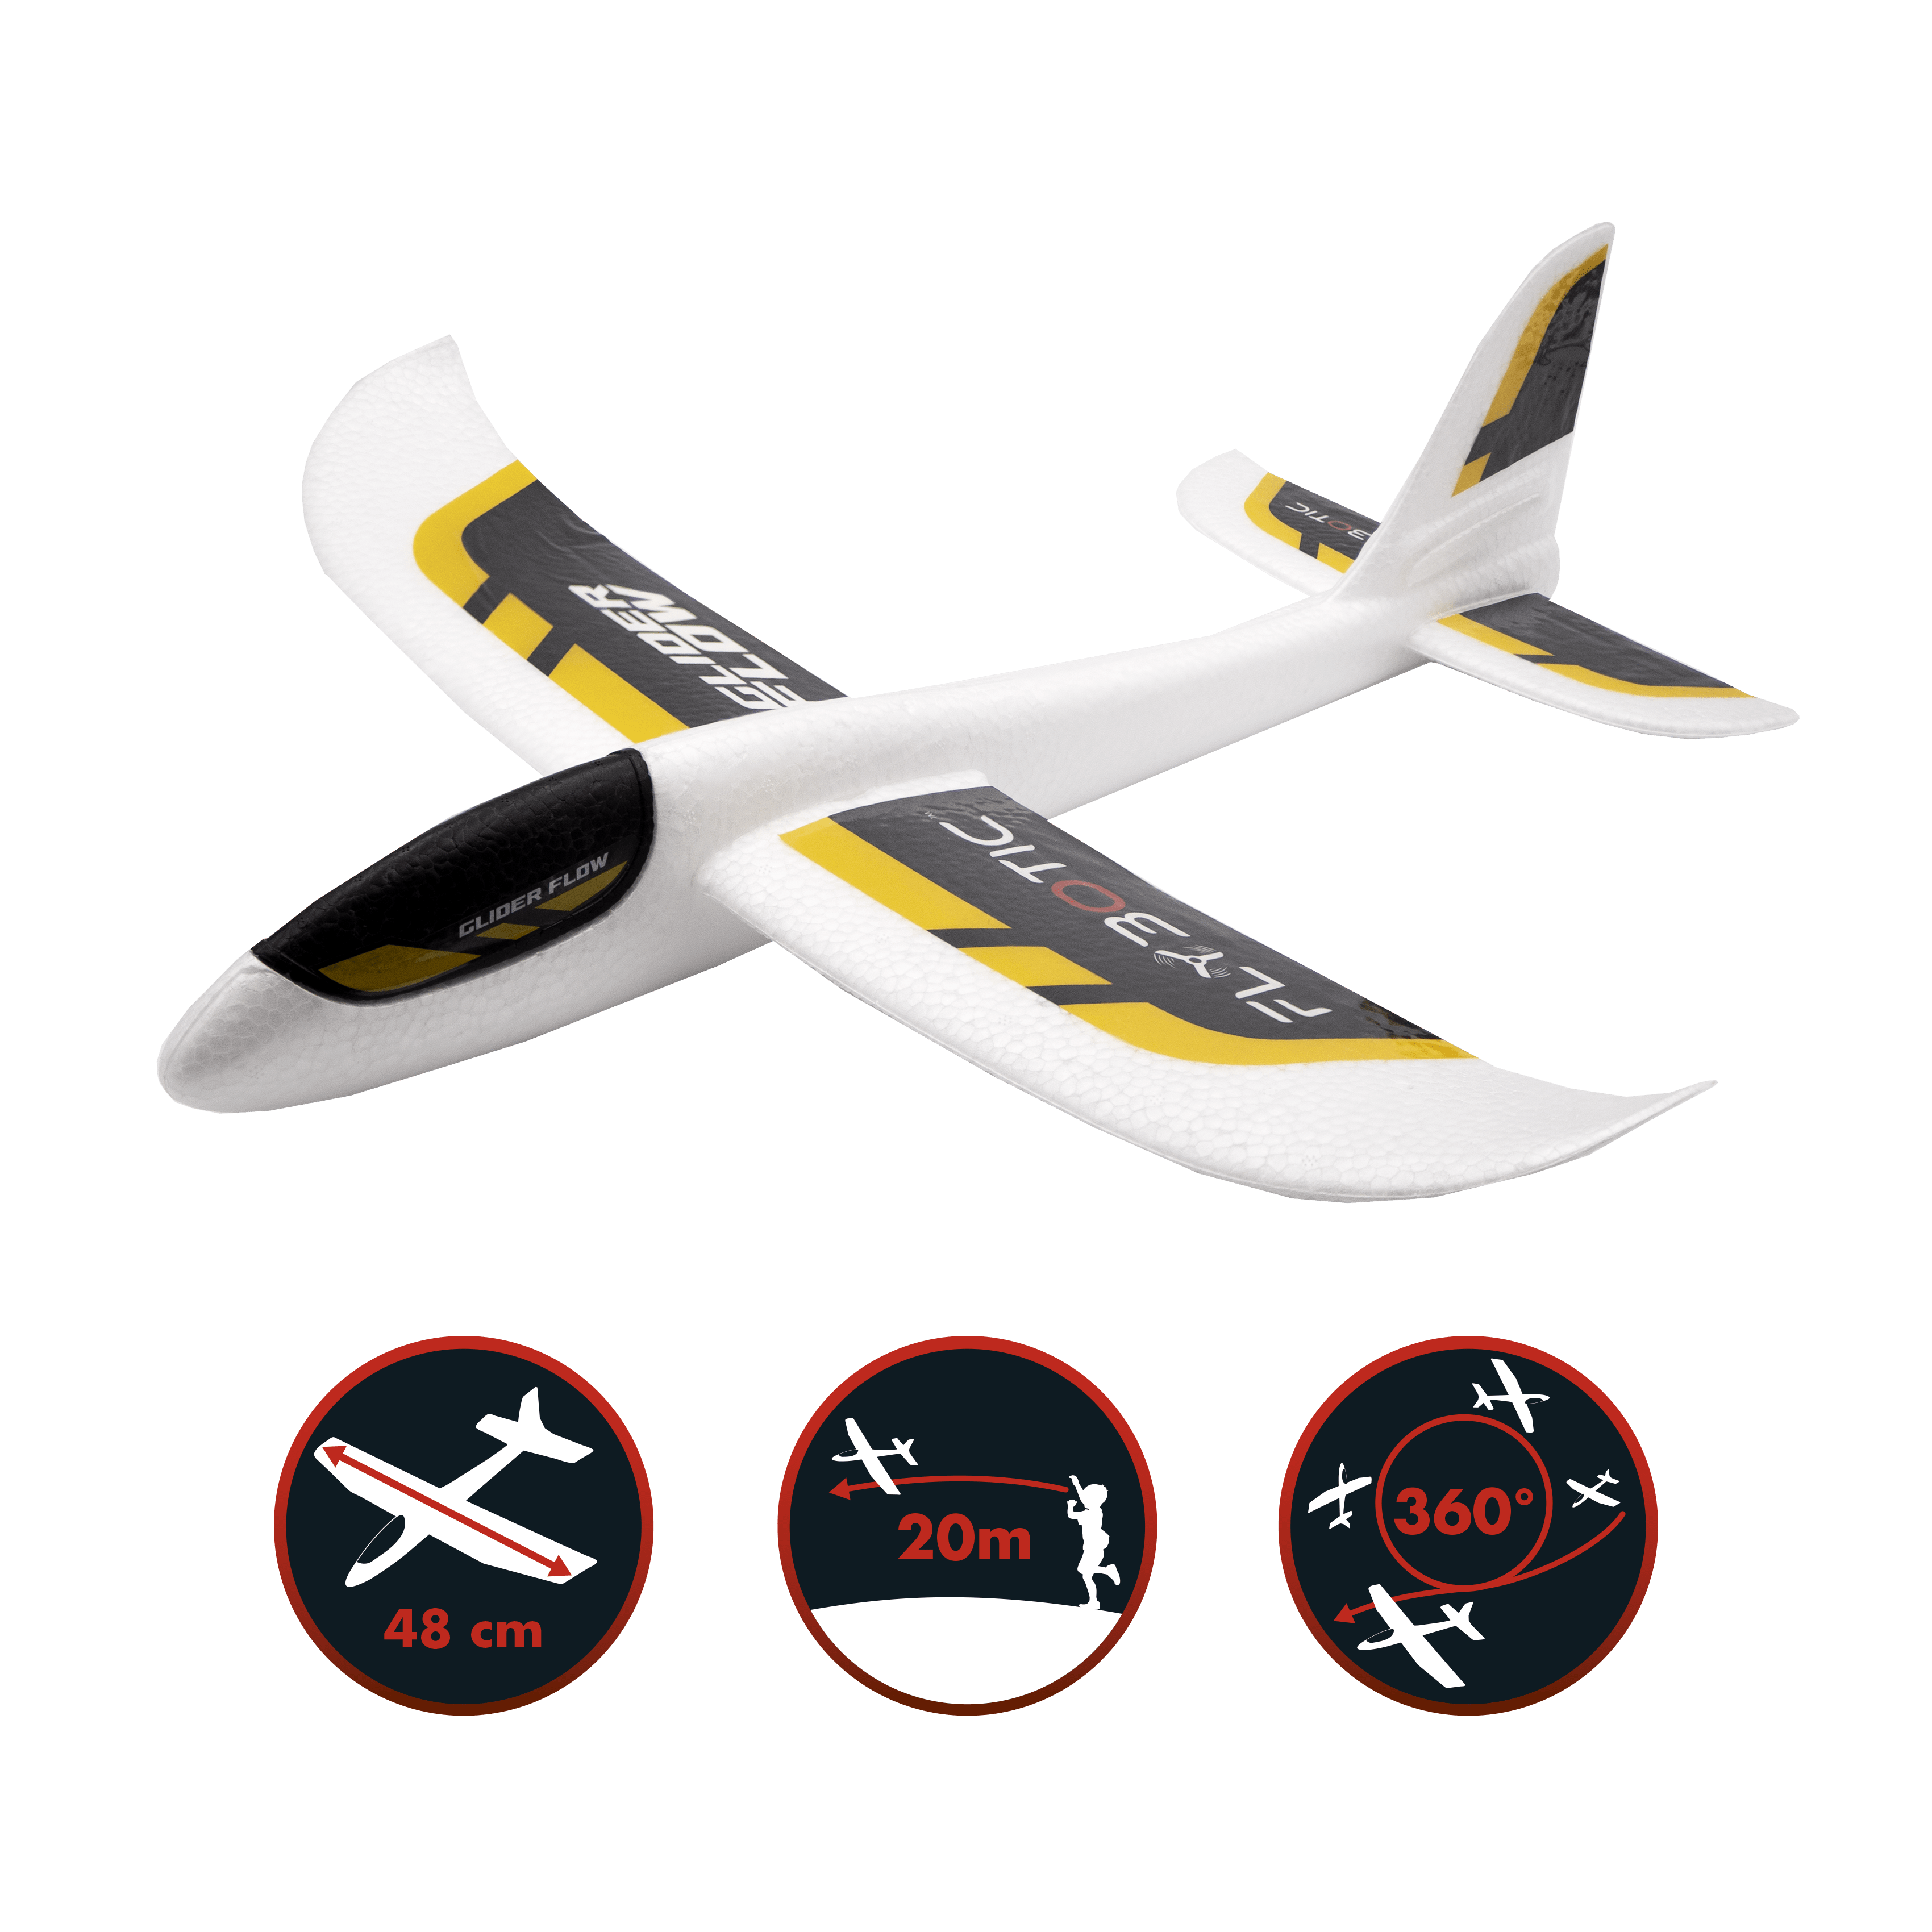 Avion Télécommandé - FLYBOTIC - Hornet Evo Flybotic : King Jouet